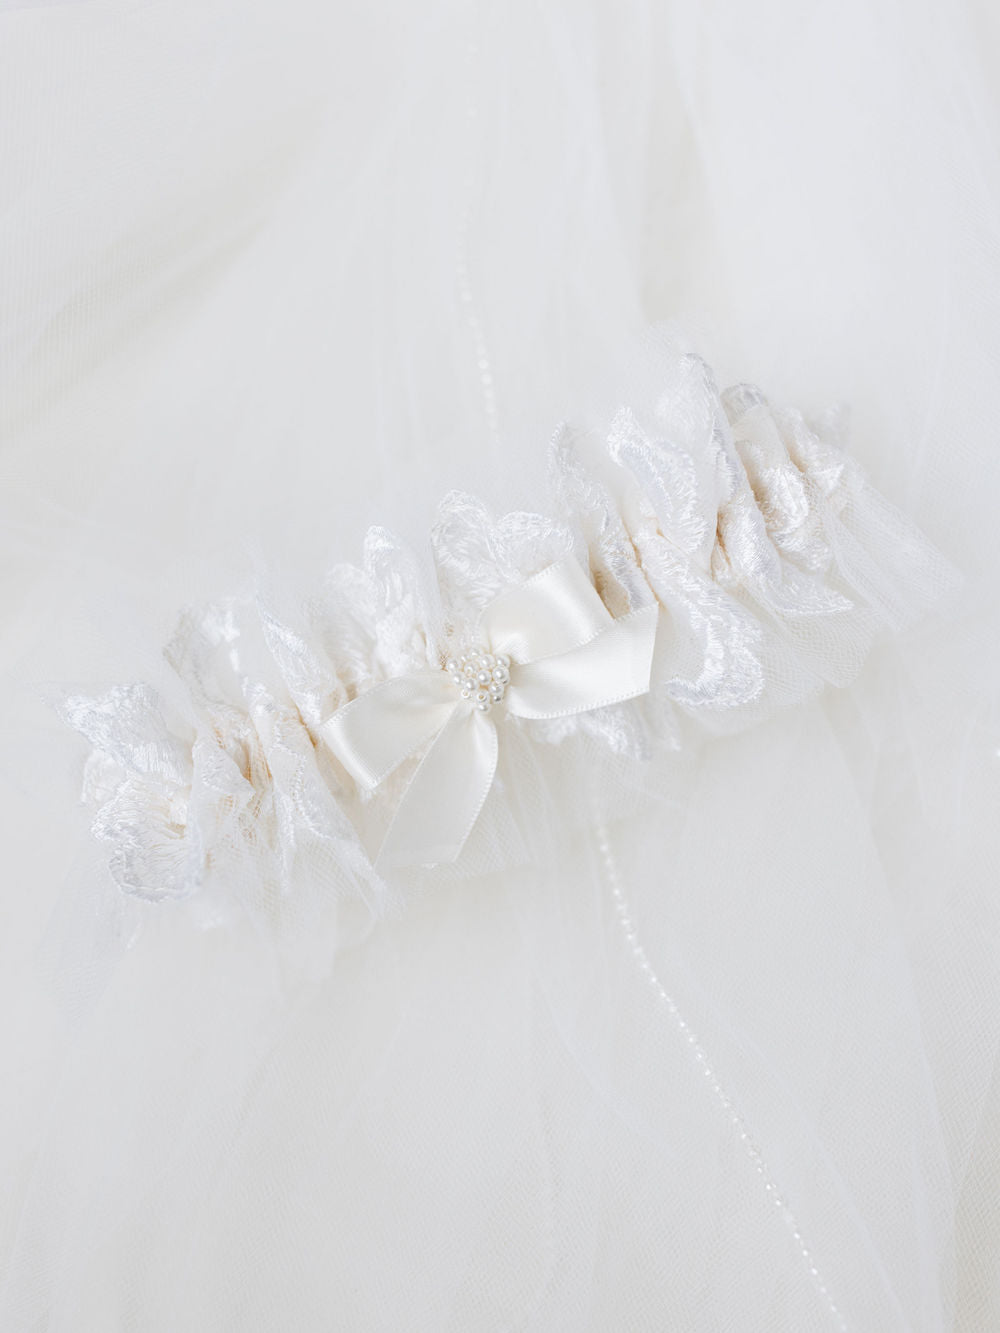 custom ivory tulle wedding garter heirloom with pearls made from mother's wedding veil handmade by The Garter Girl